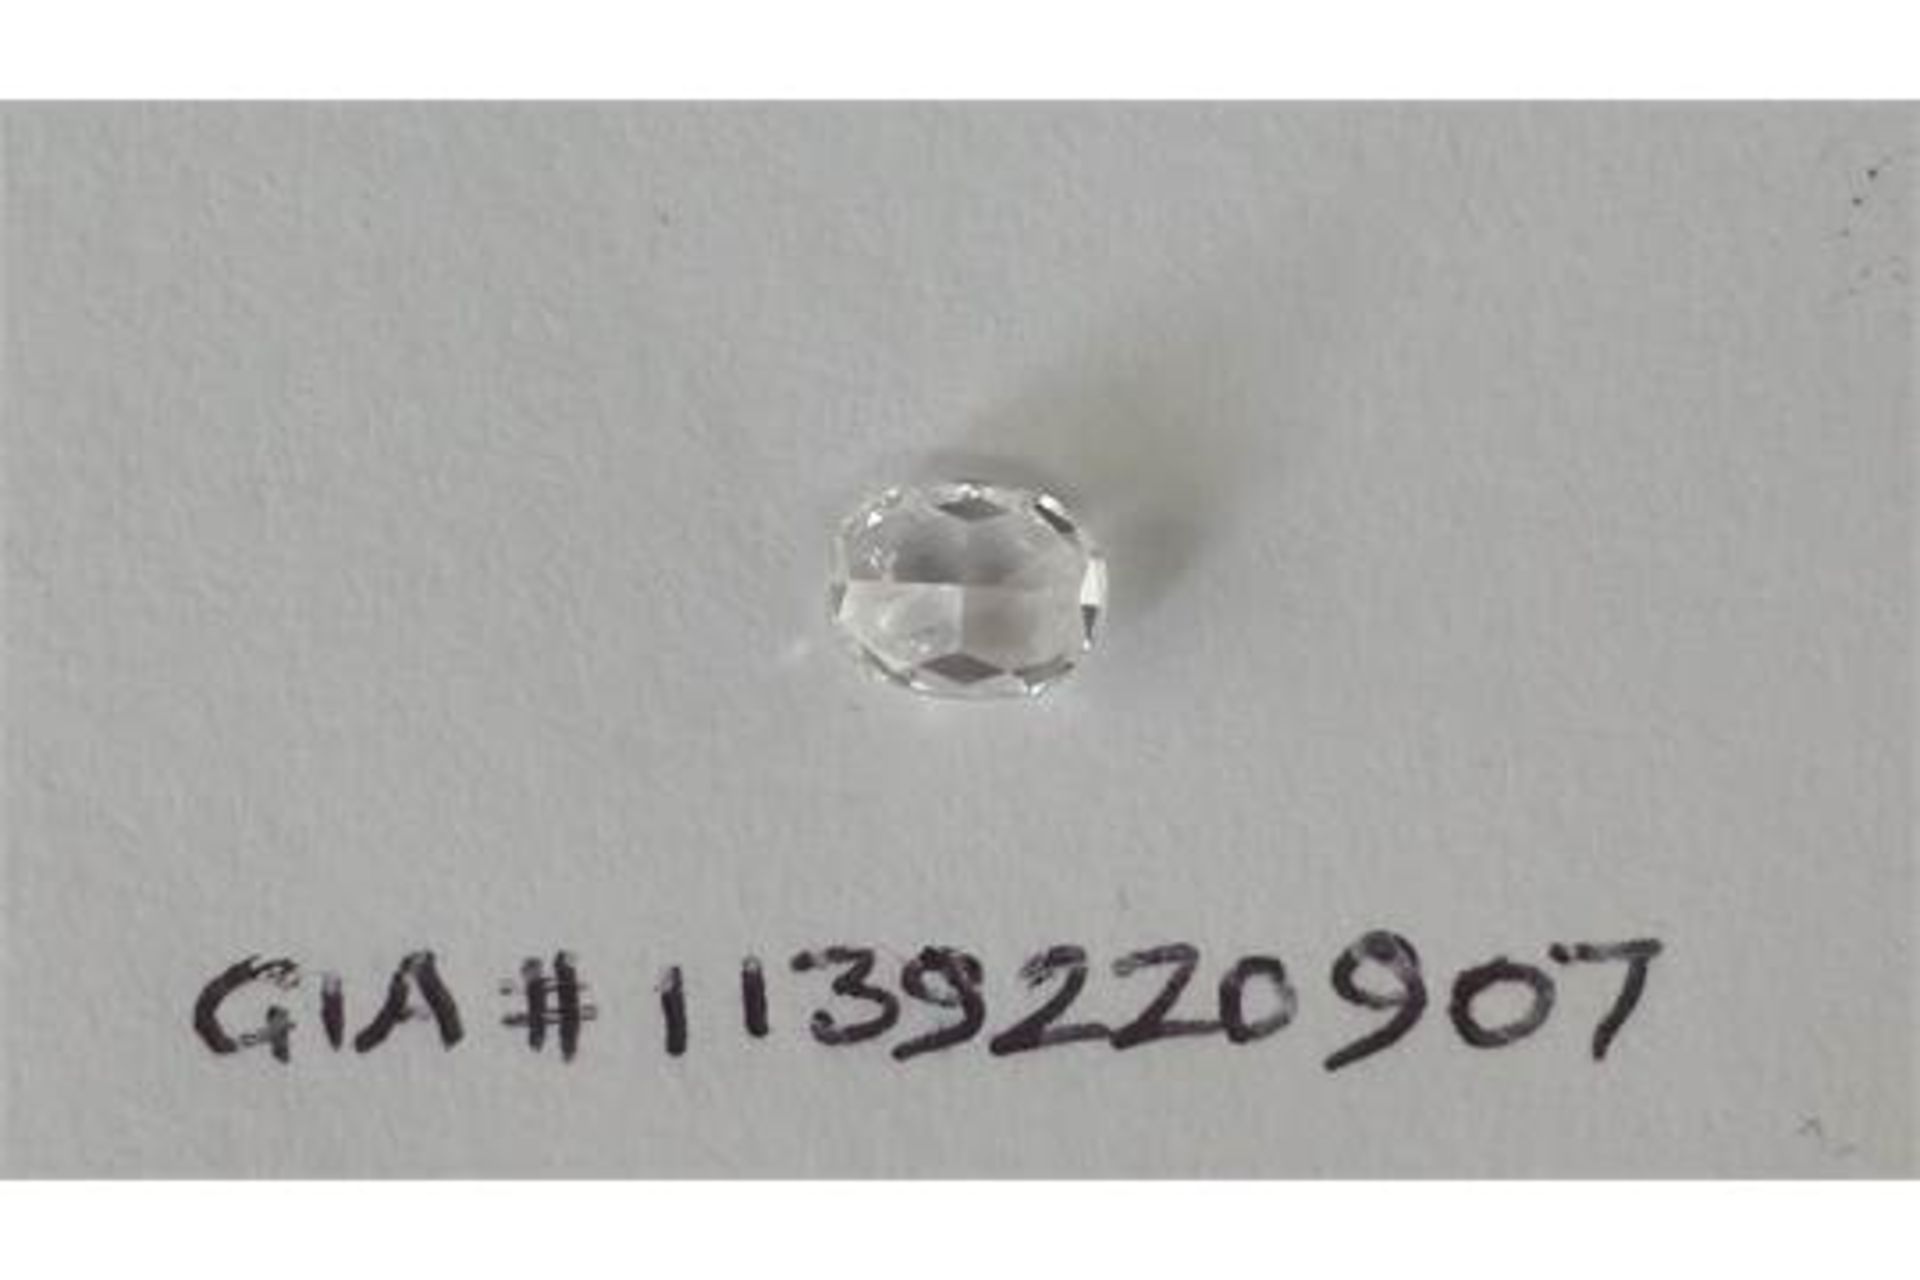 0.53 carat Oval Modified Brilliant Diamond